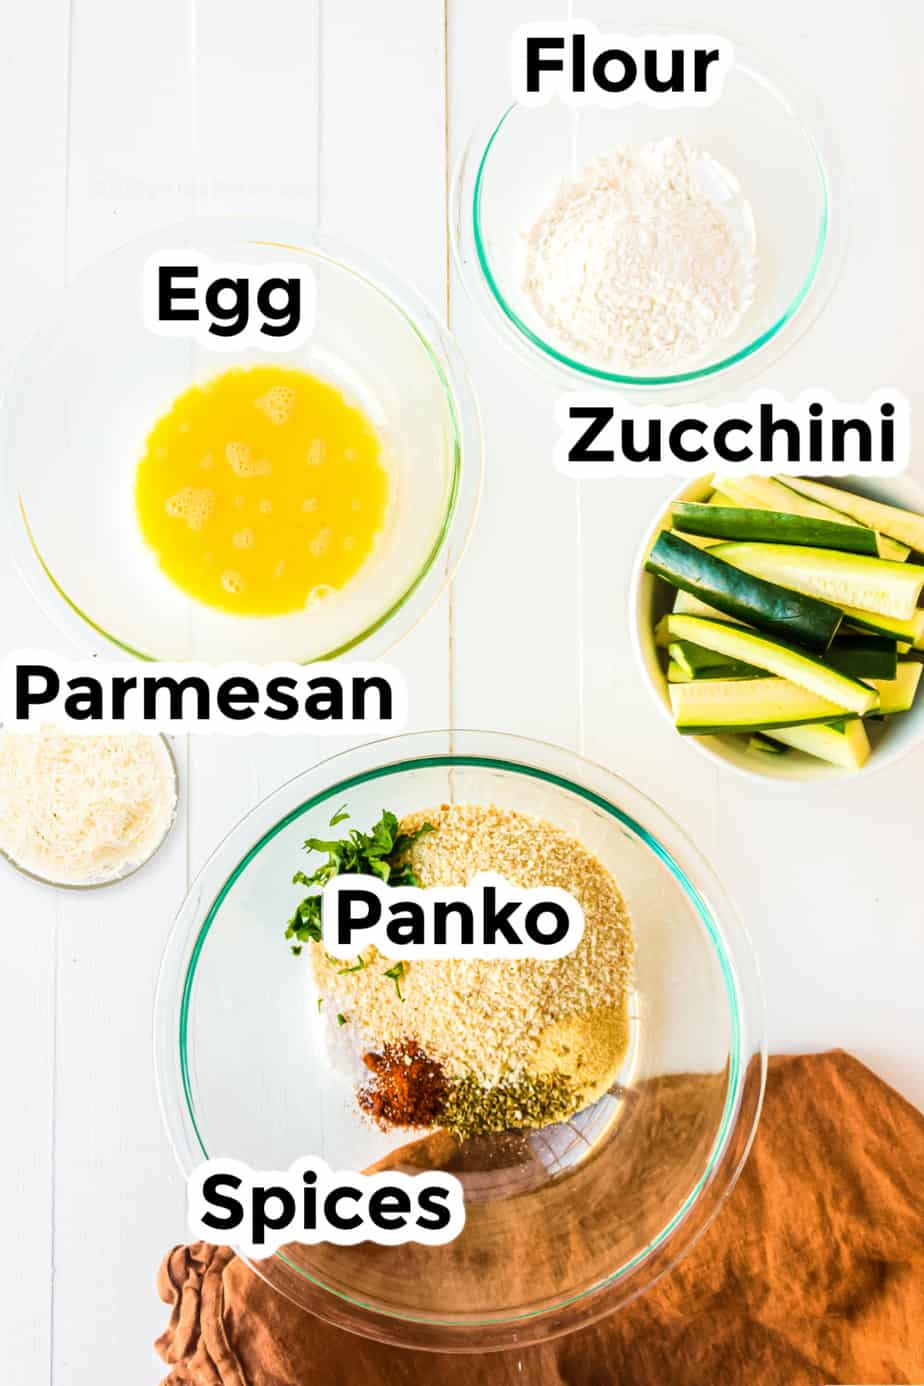 Ingredients in bowls for Parmesan Garlic Zucchini Fries